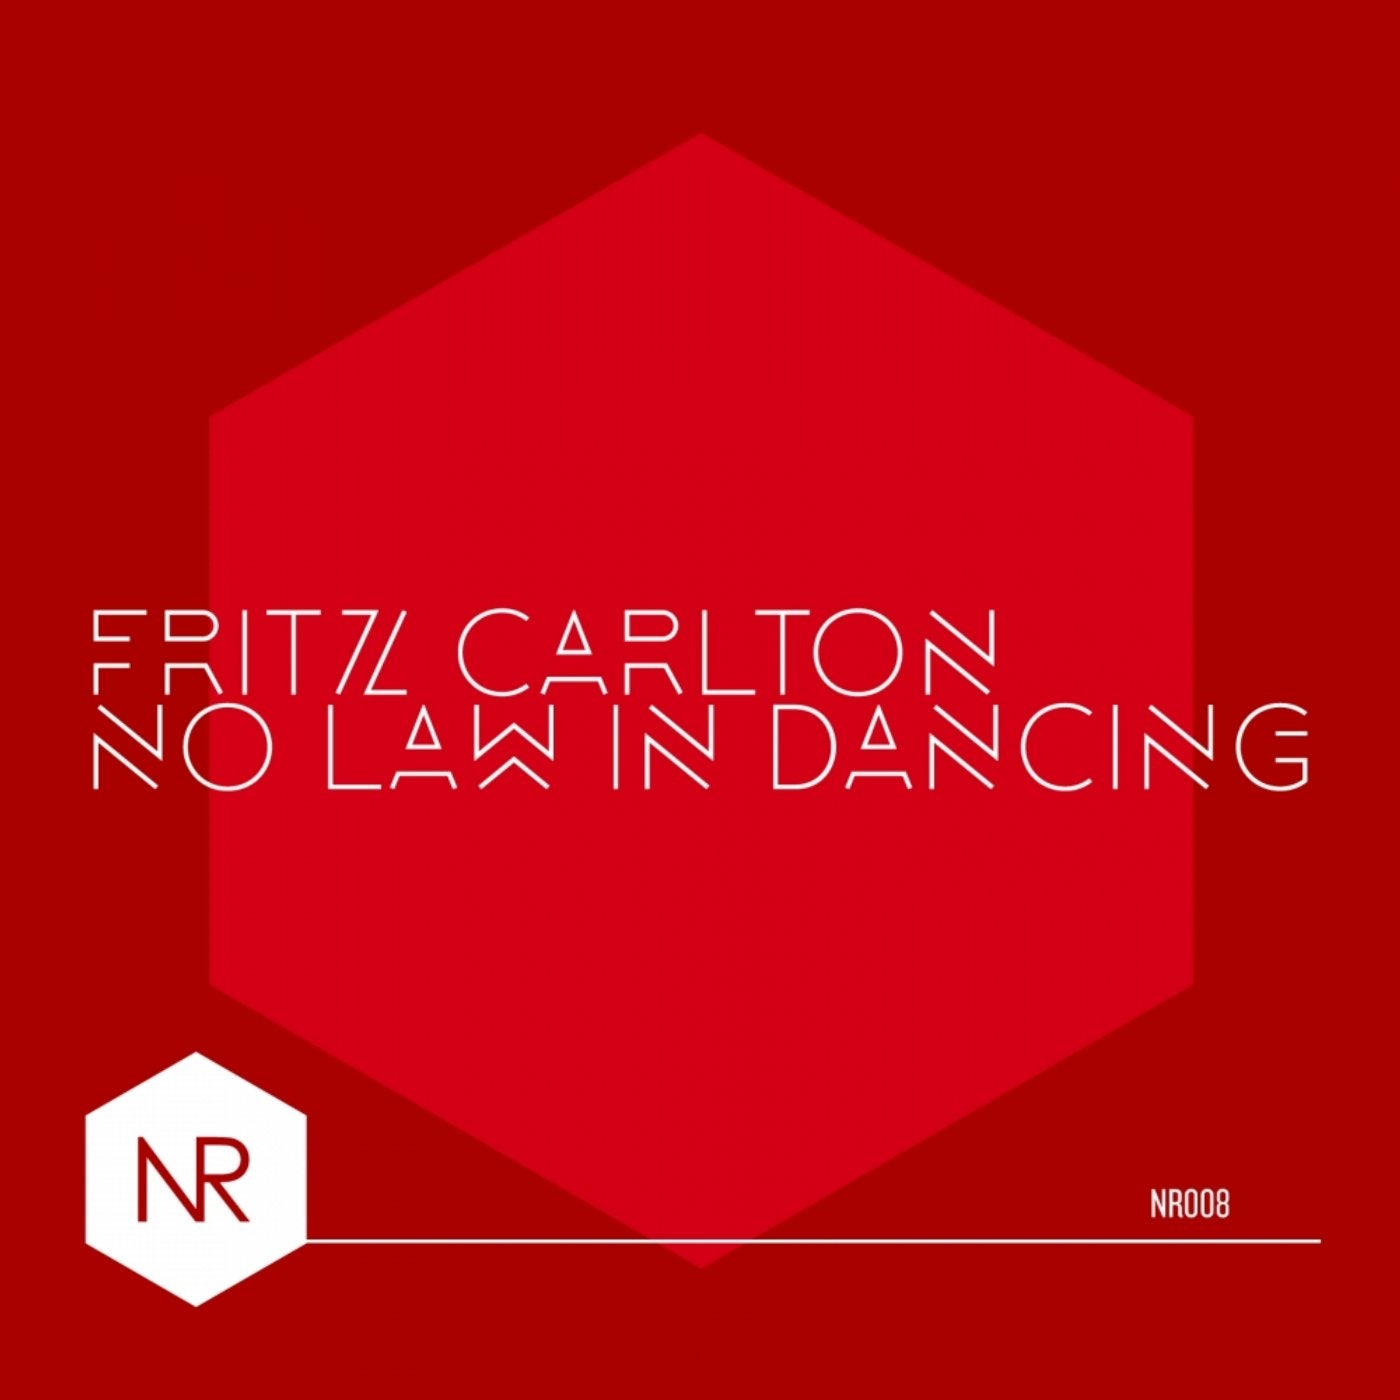 No Law In Dancing